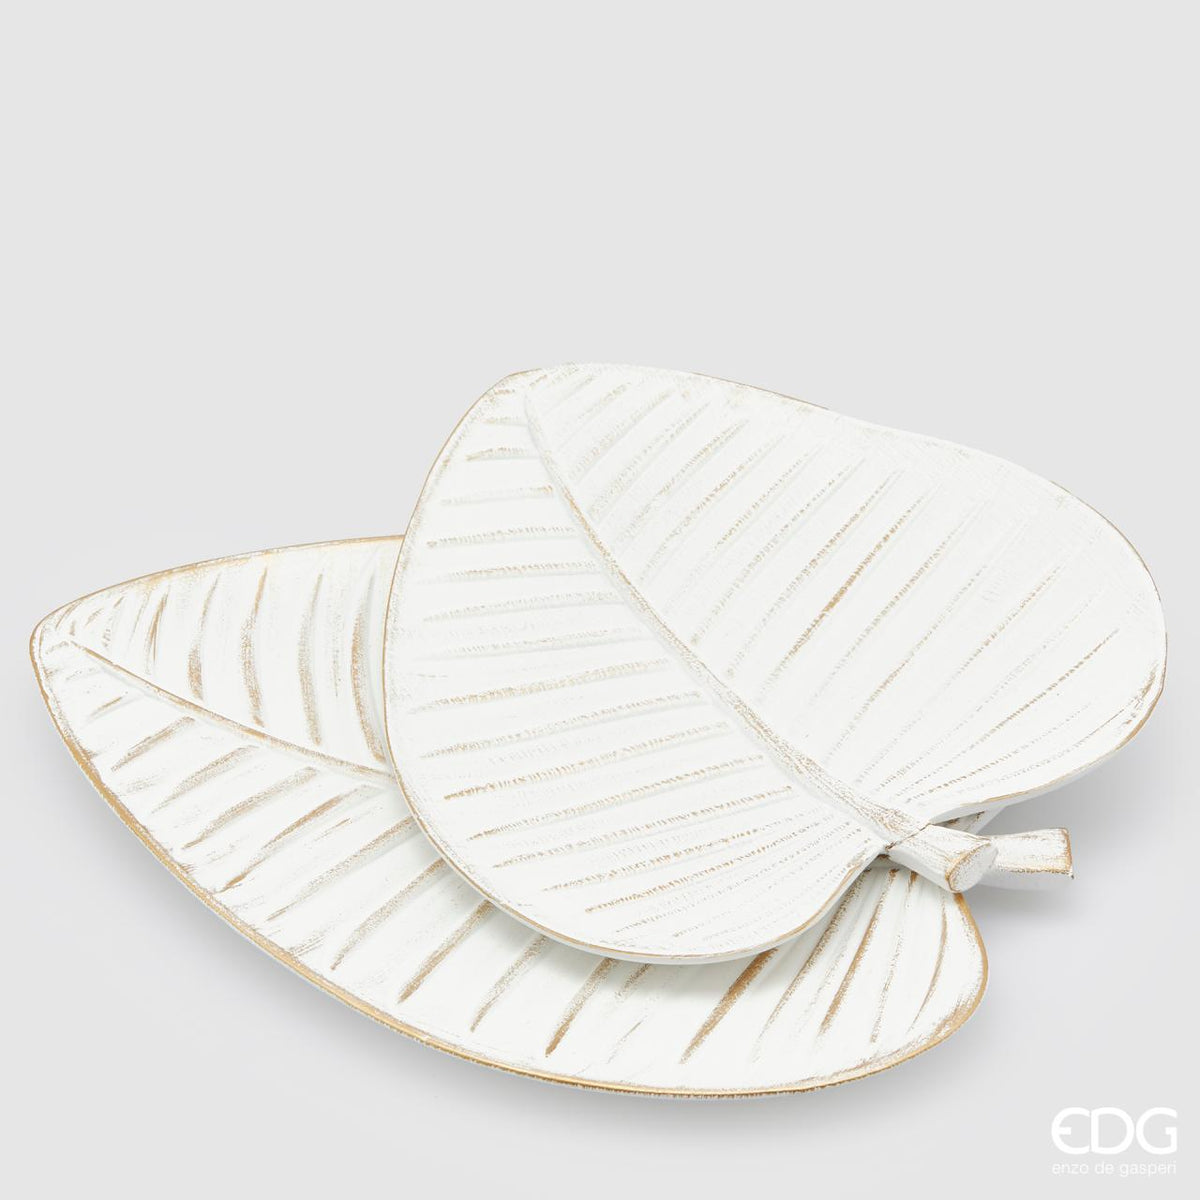 Edg - white mint leaf plate | rohome